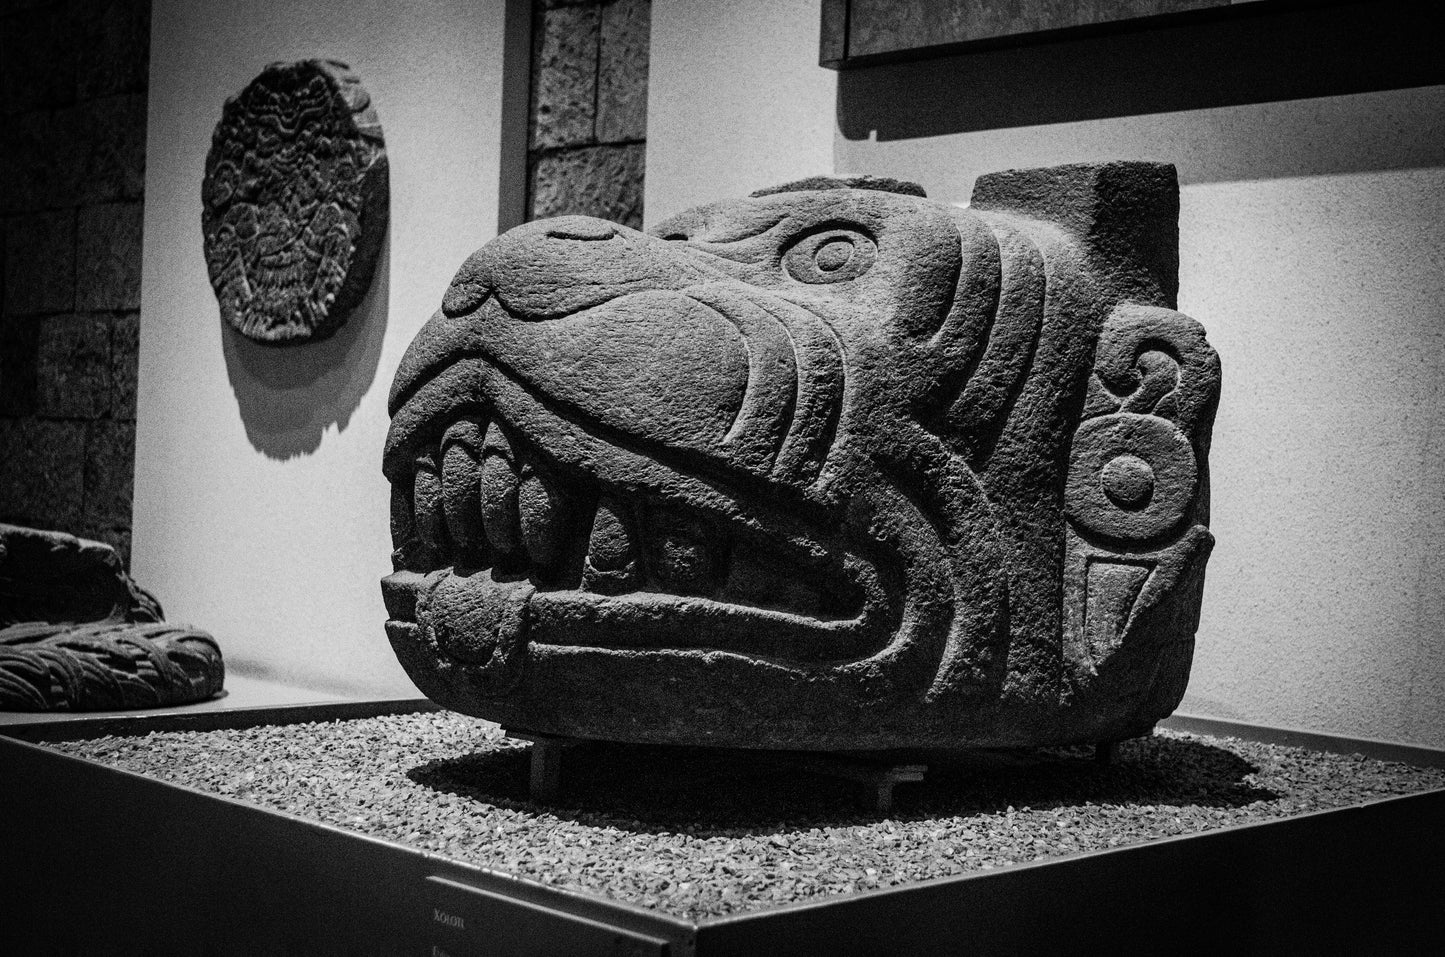 Anthropology Museum Tour: Explore Forgotten Cultures